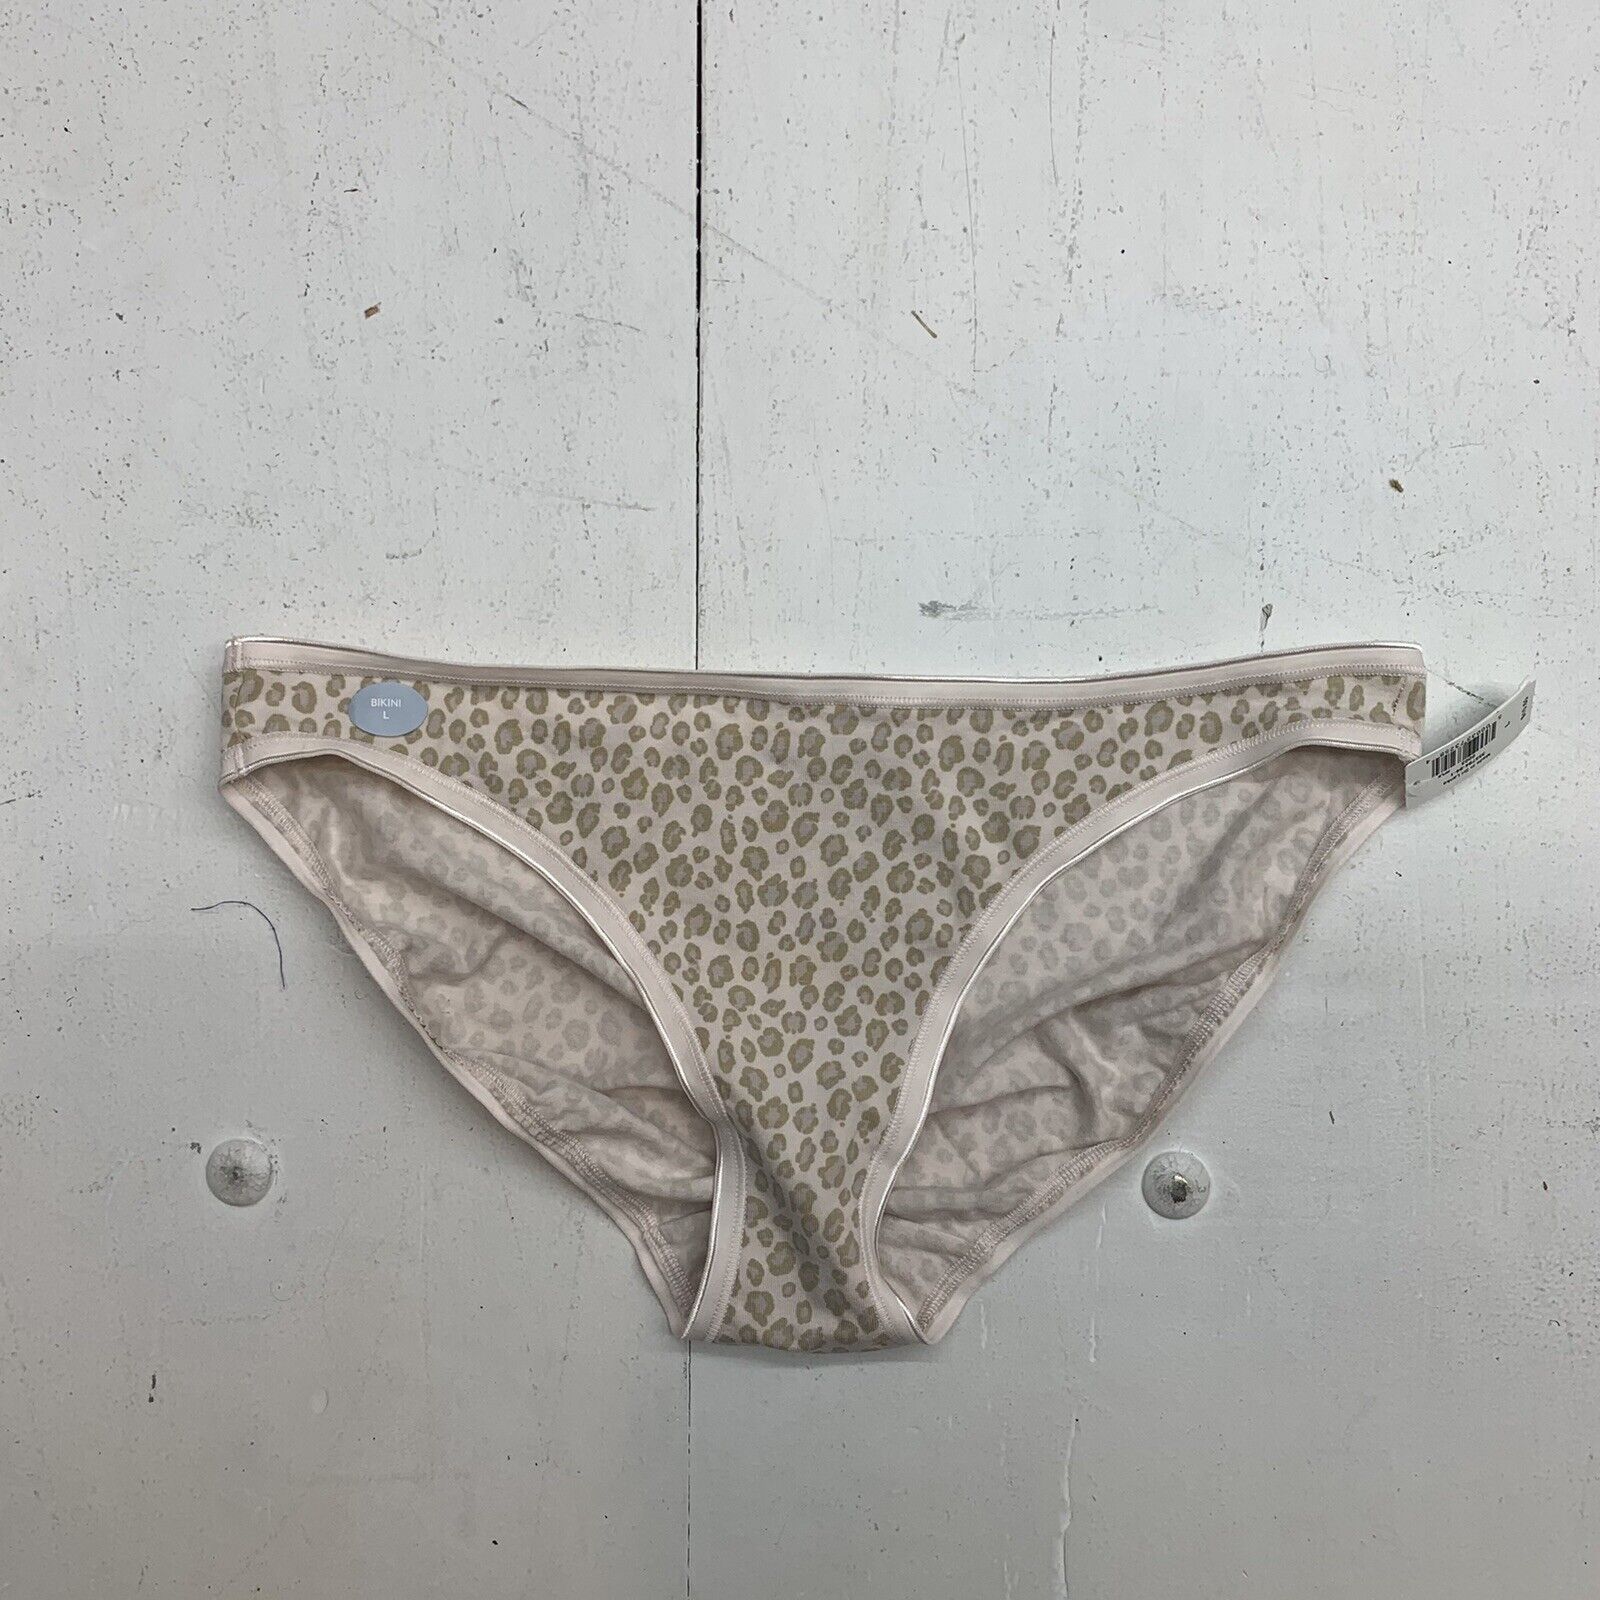 Gap Women's Panties